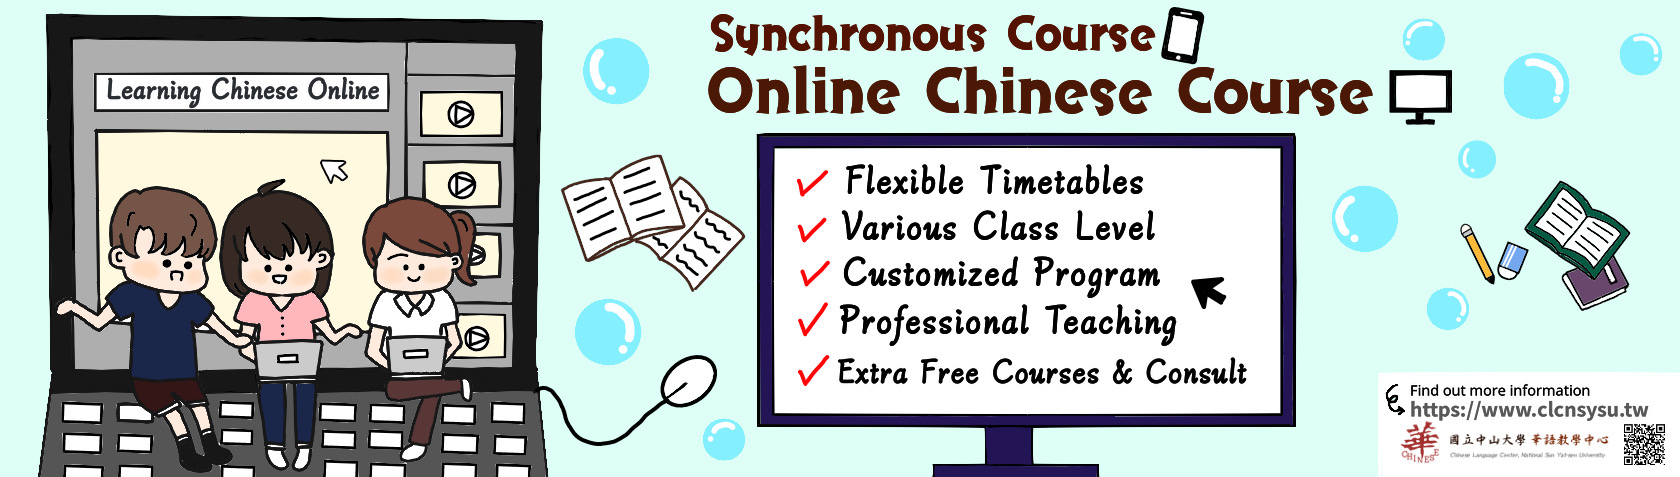 Synchronous Course